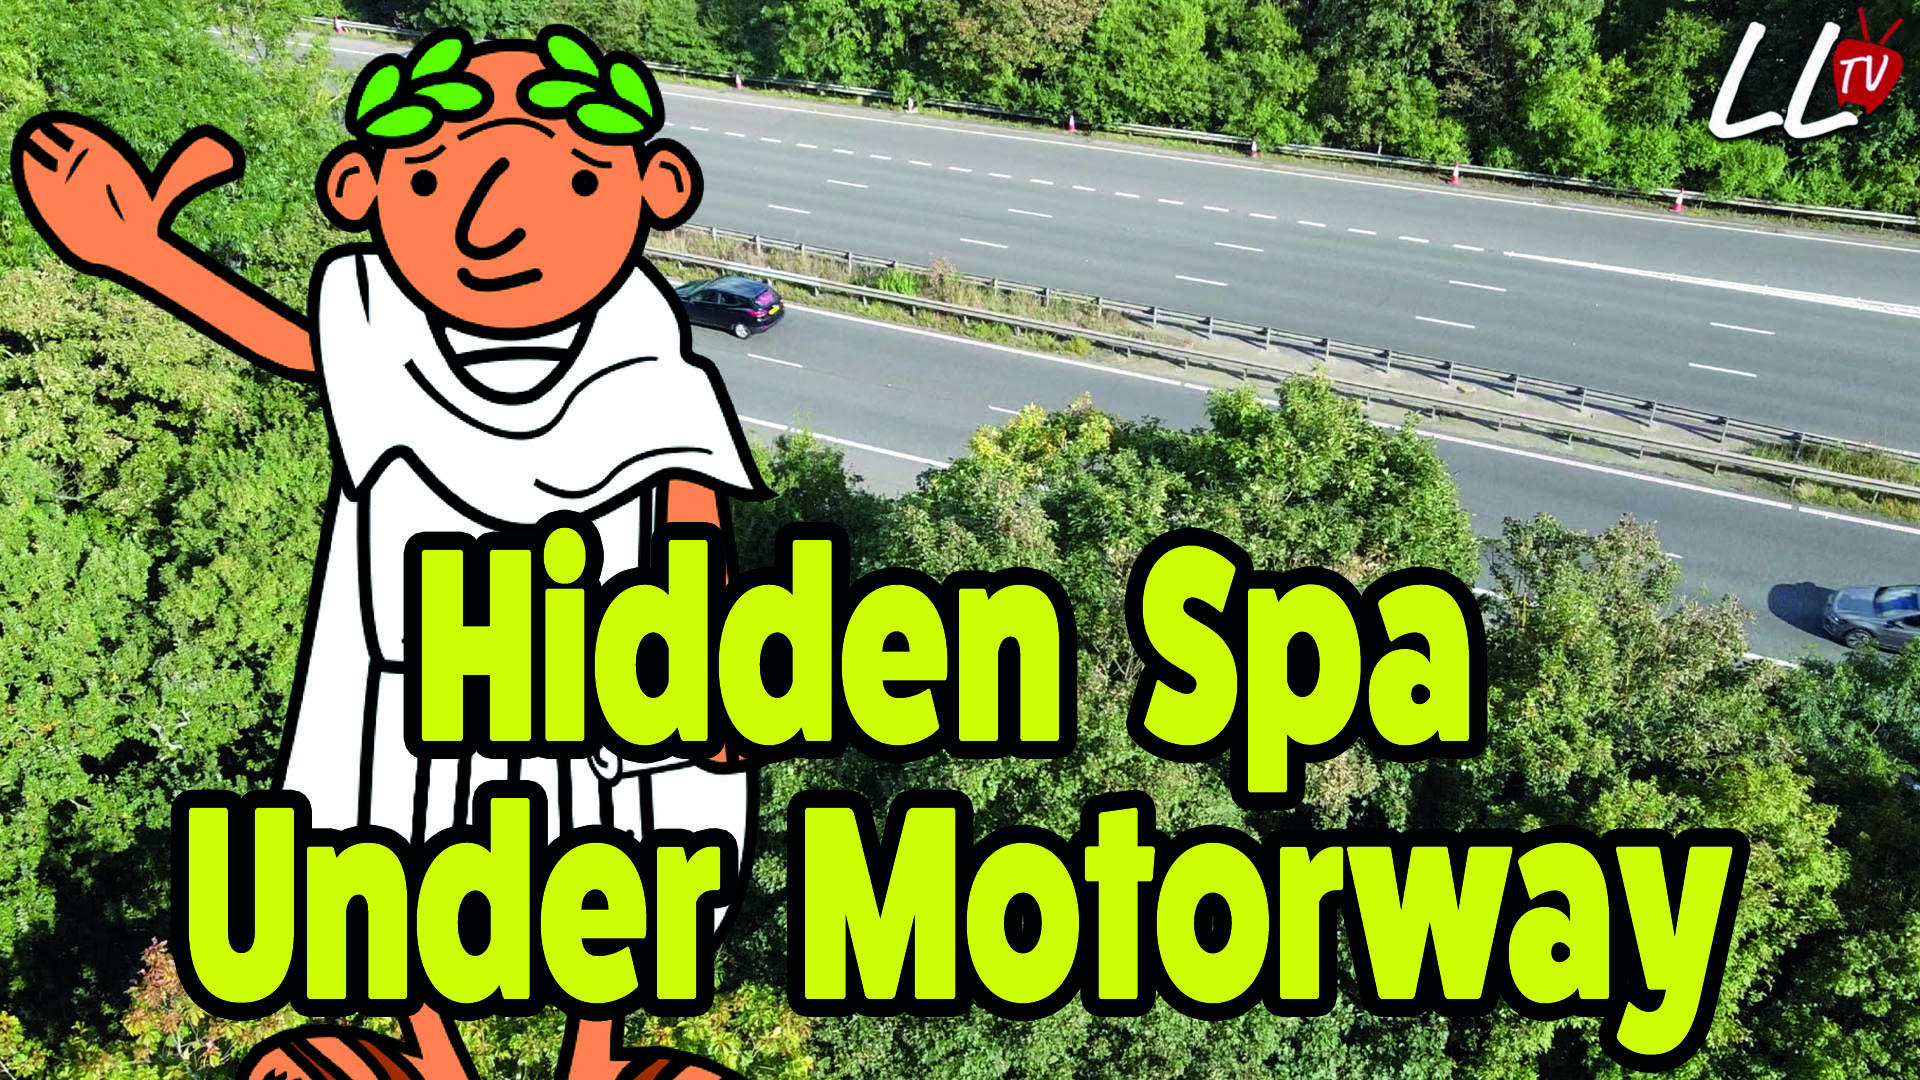 Hidden spa under motorway